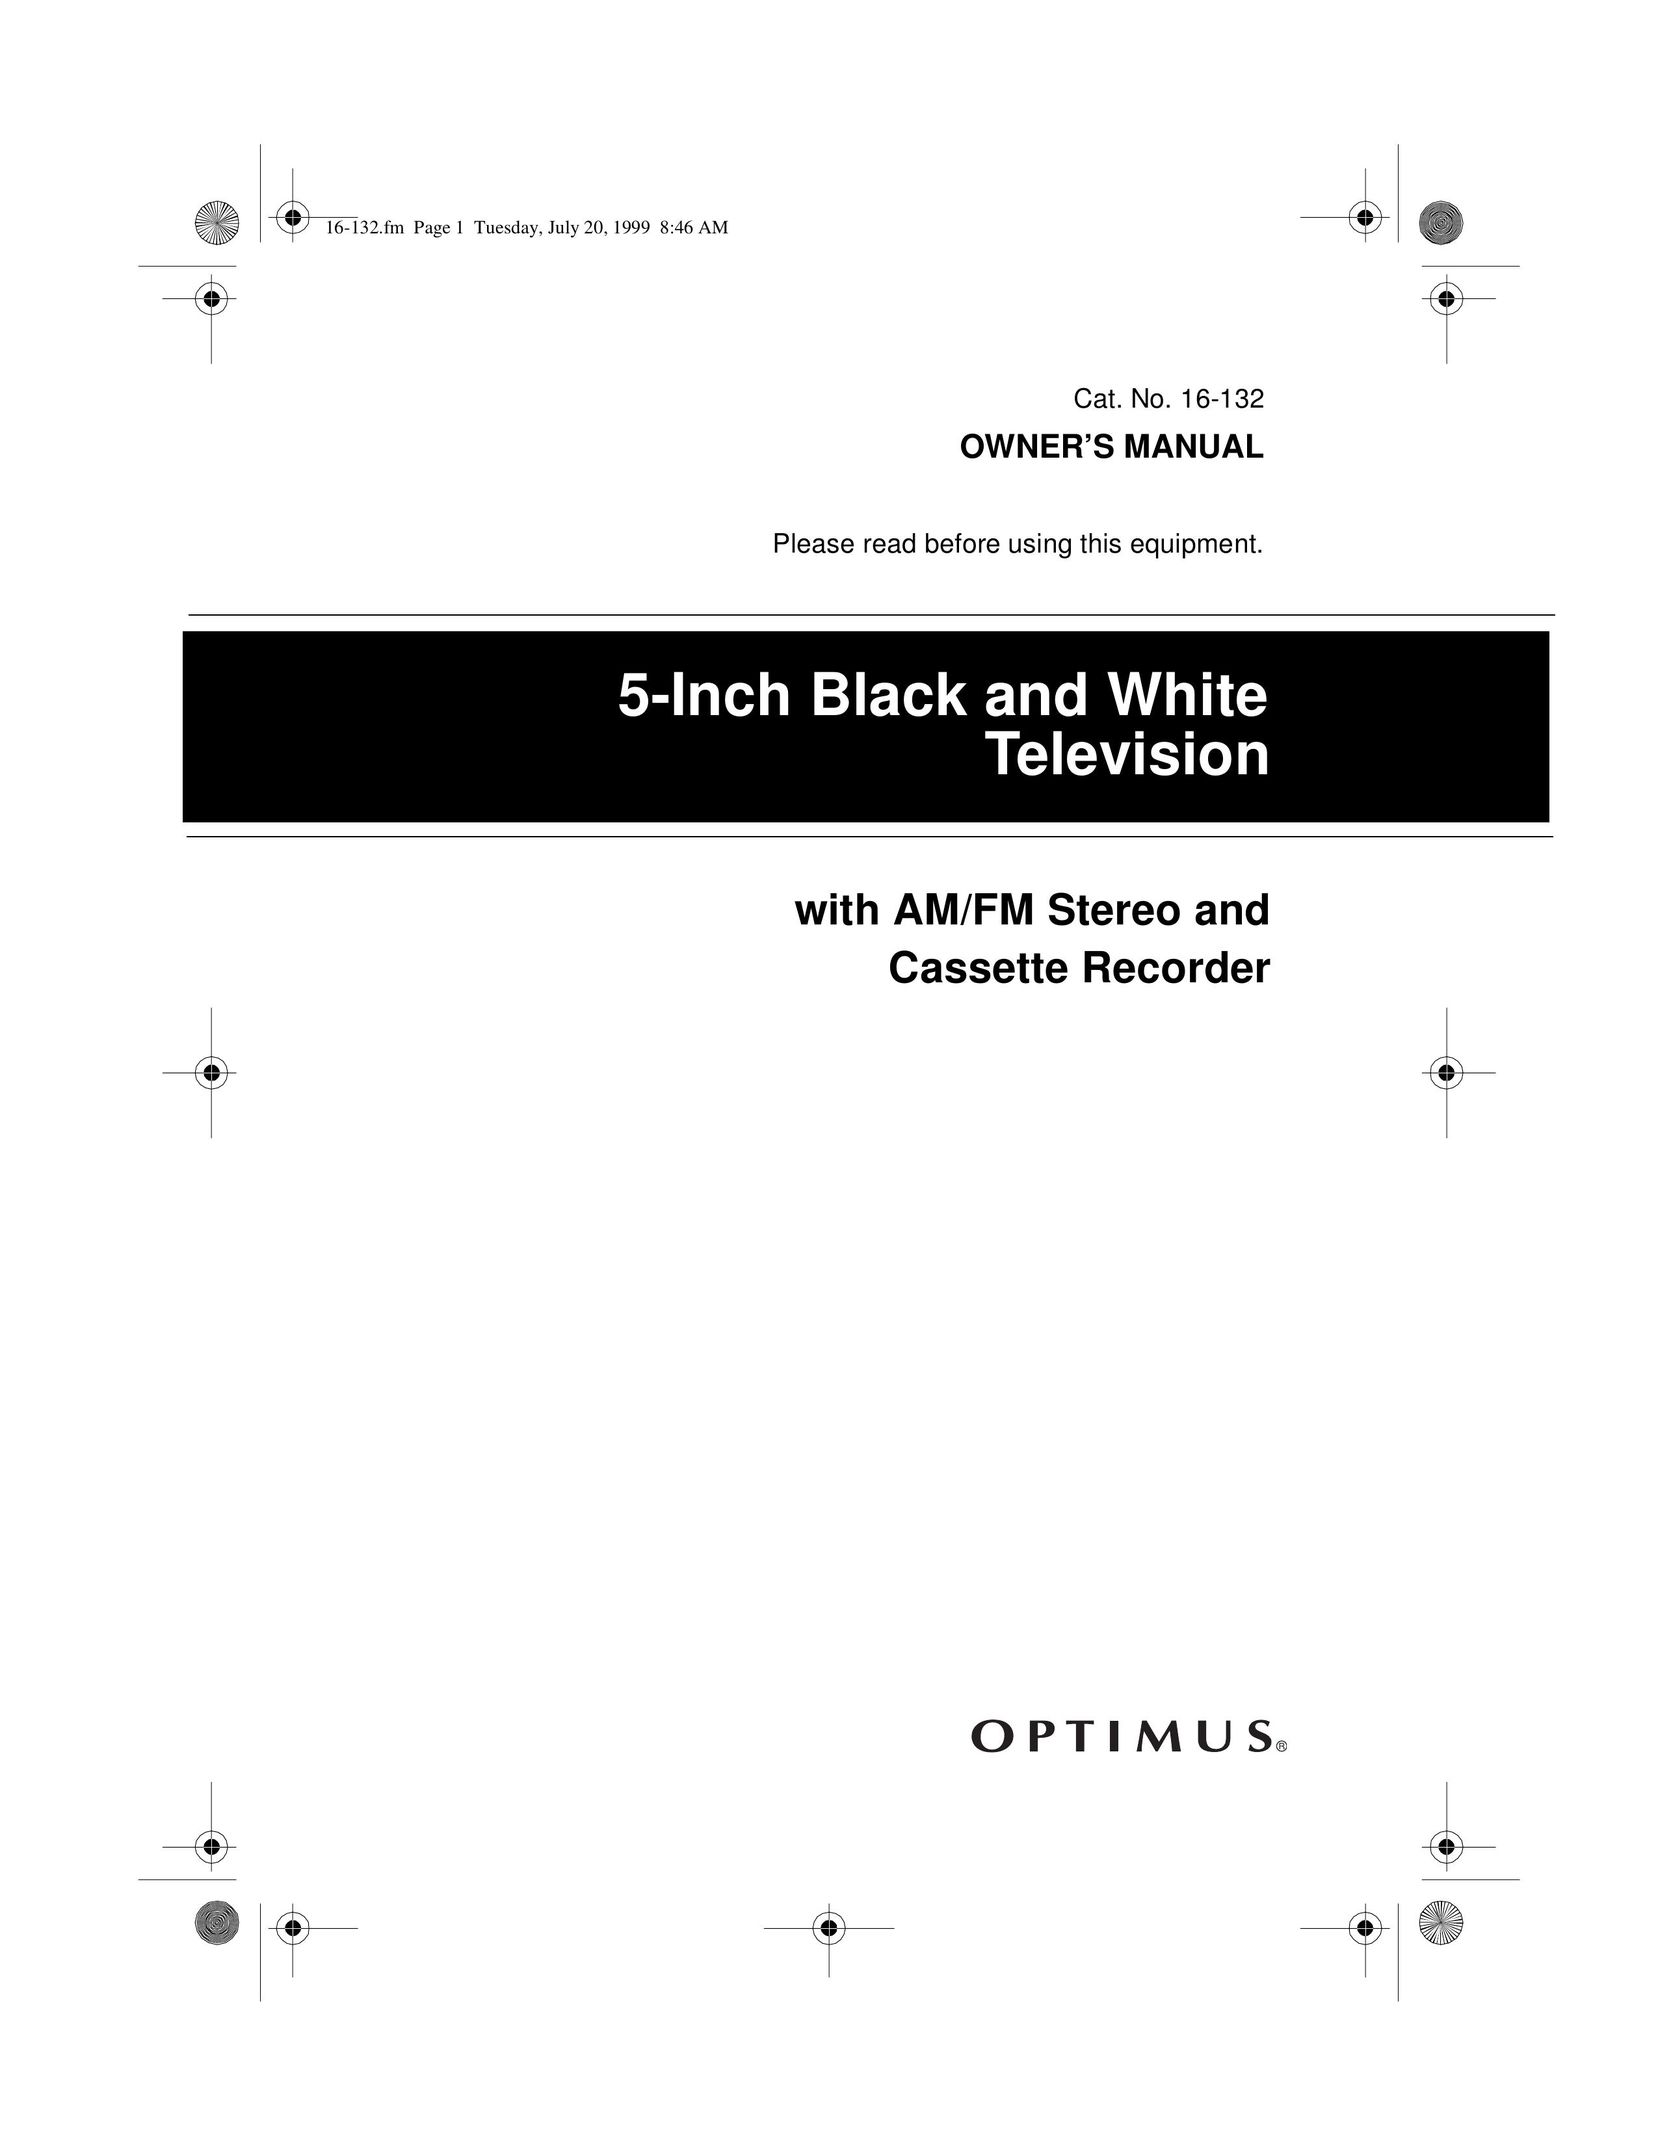 Optimus 16-132 CRT Television User Manual